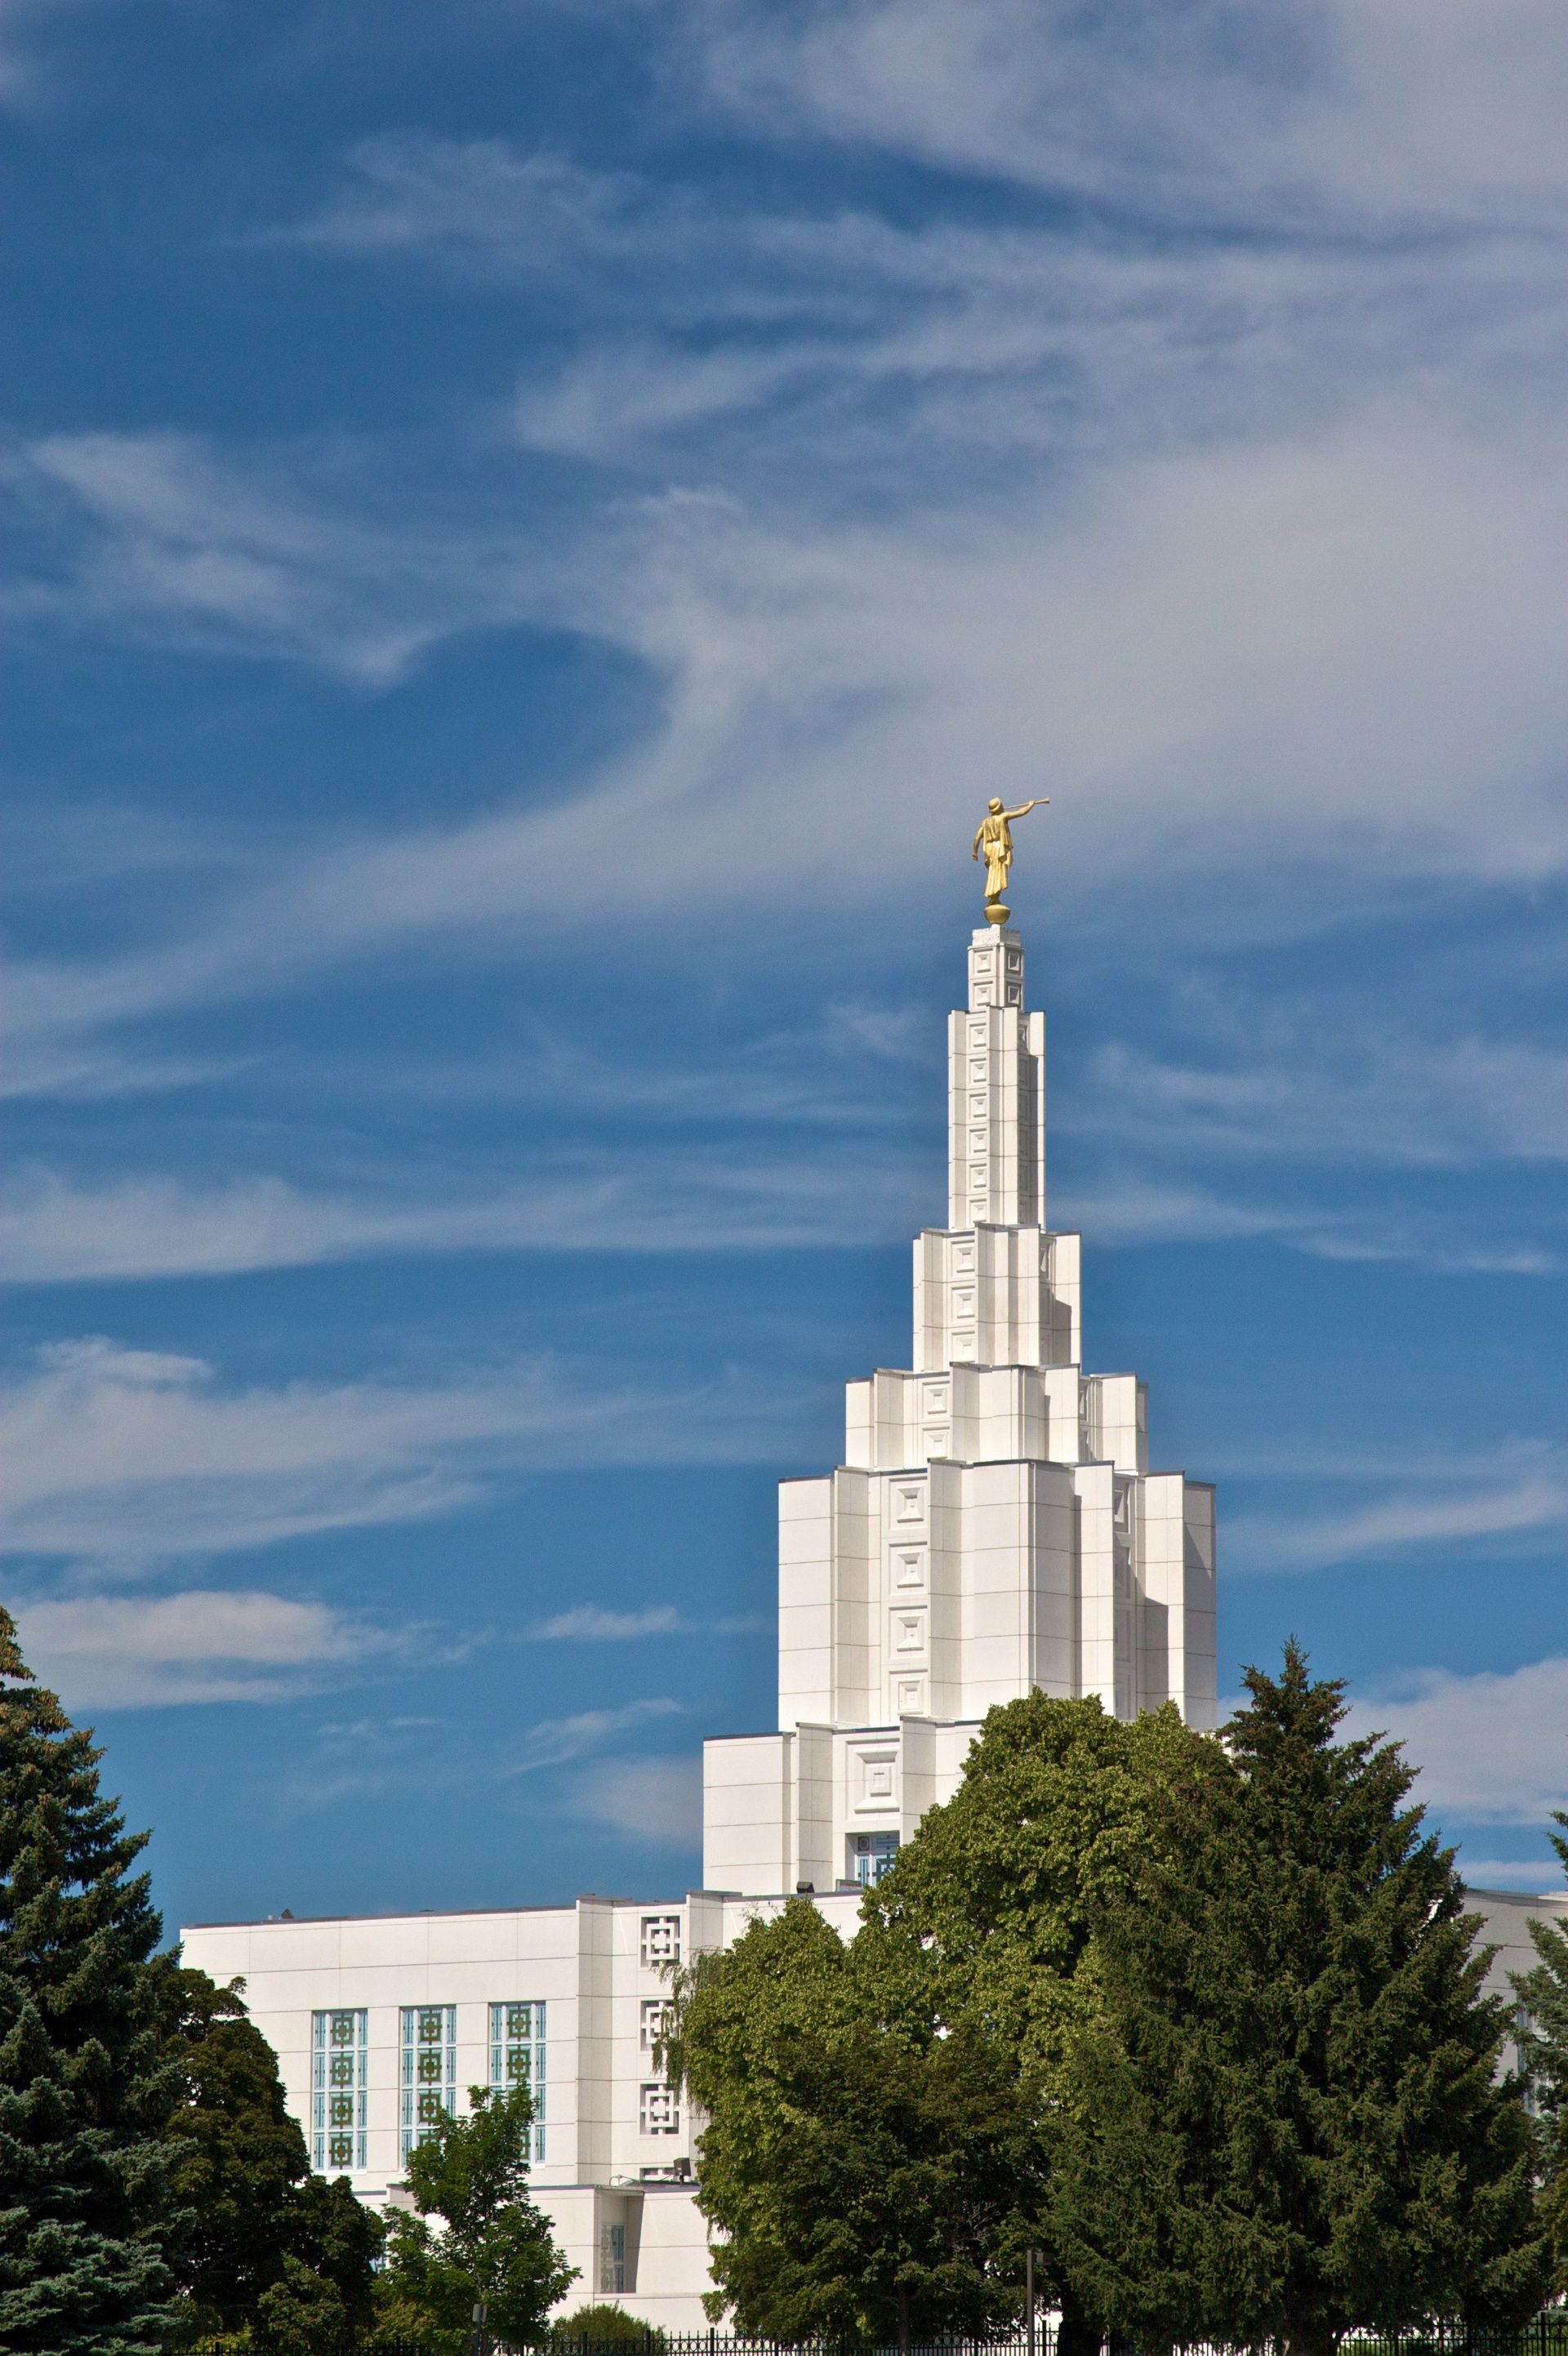 An exterior view of the Idaho Falls Idaho Temple.